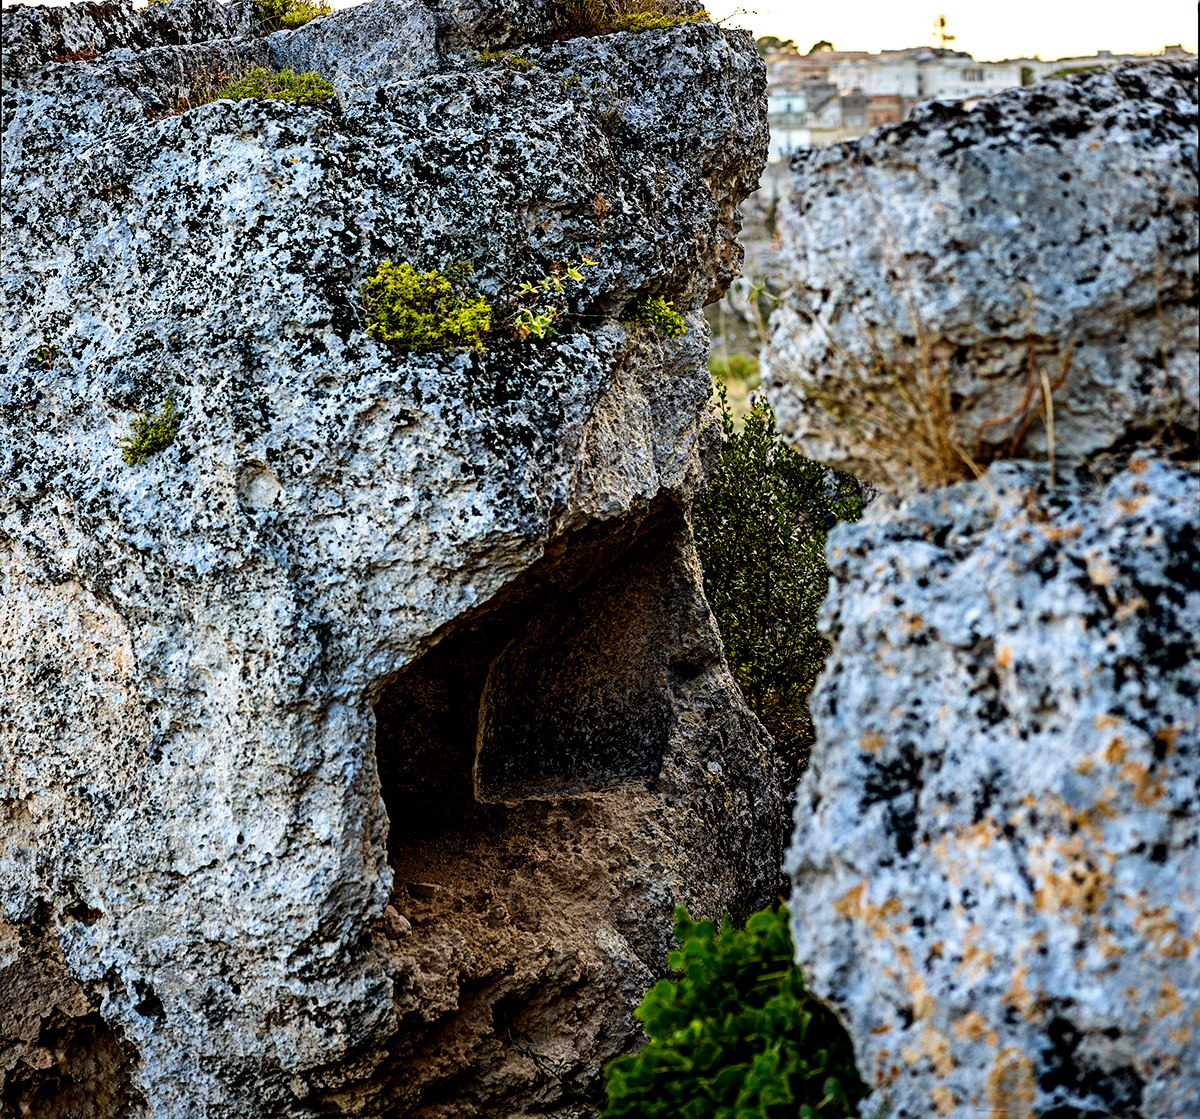 matera UNESCO cultural heritage city culture 2019 south Italy stones Nature Landscape historic rural monnalisa Caves